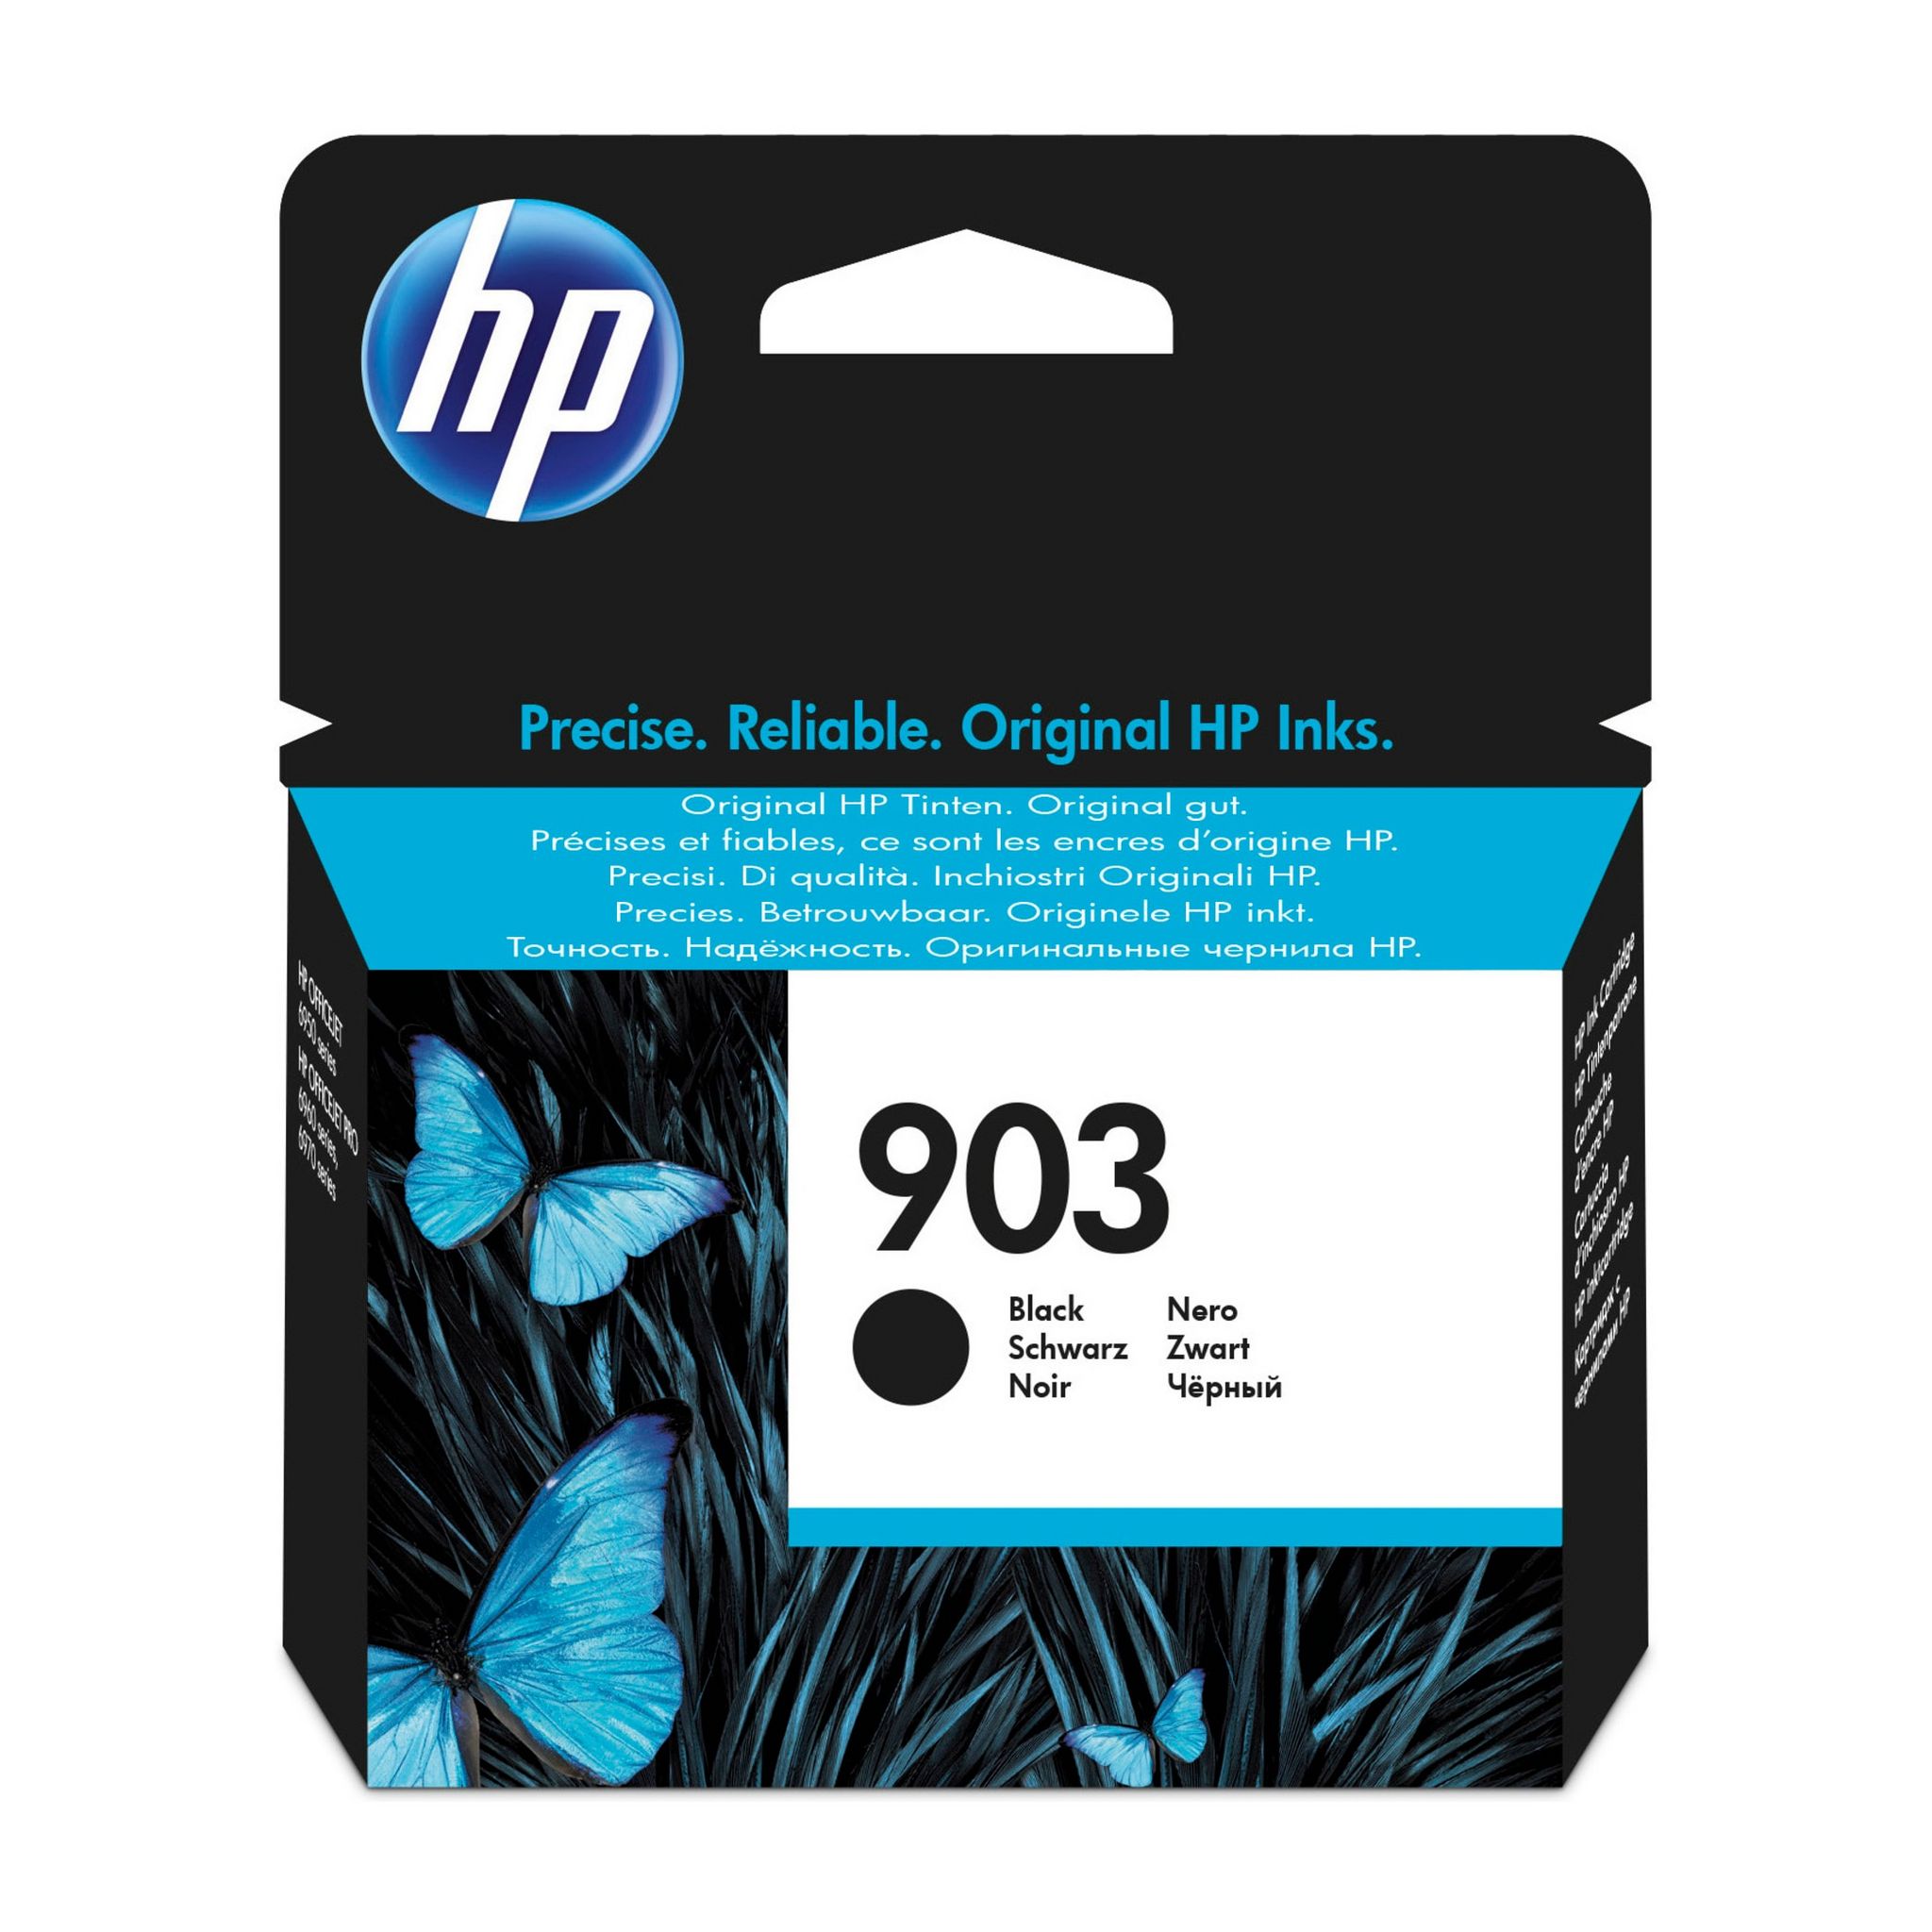 Cartouhes HP OfficeJet Pro 6970 pas cher - k2print